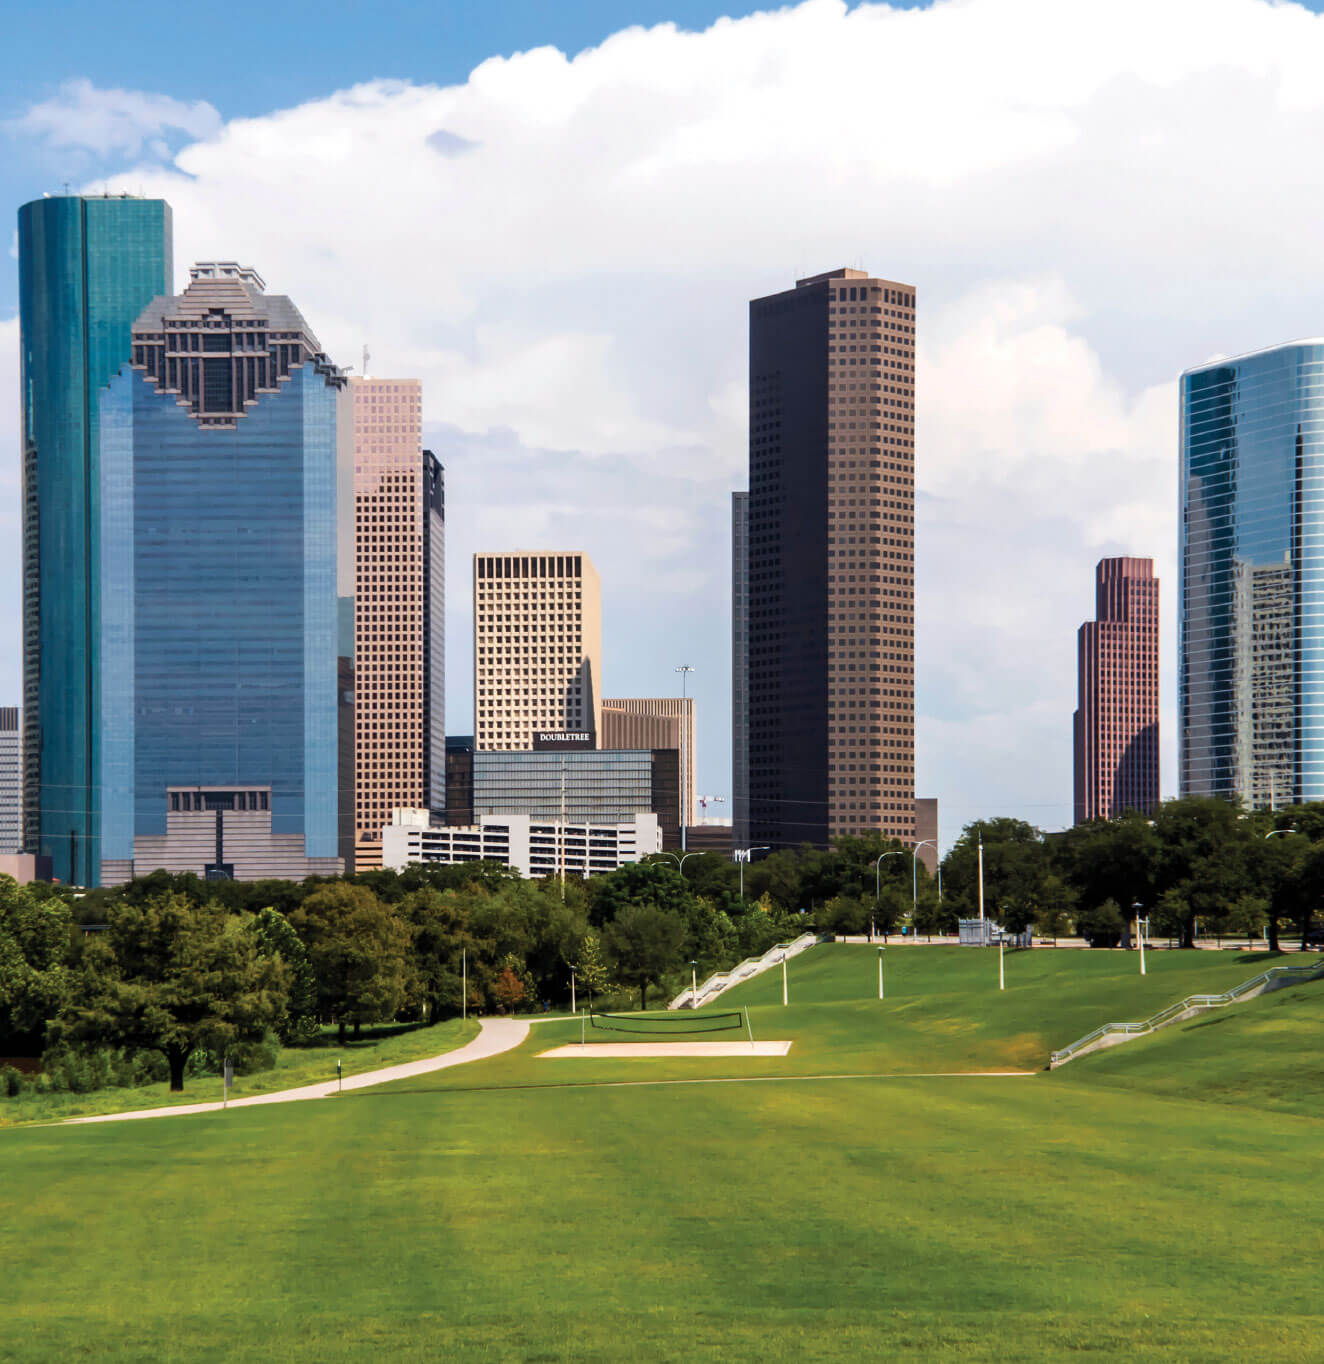 Image of the Houston, Texas city skyline